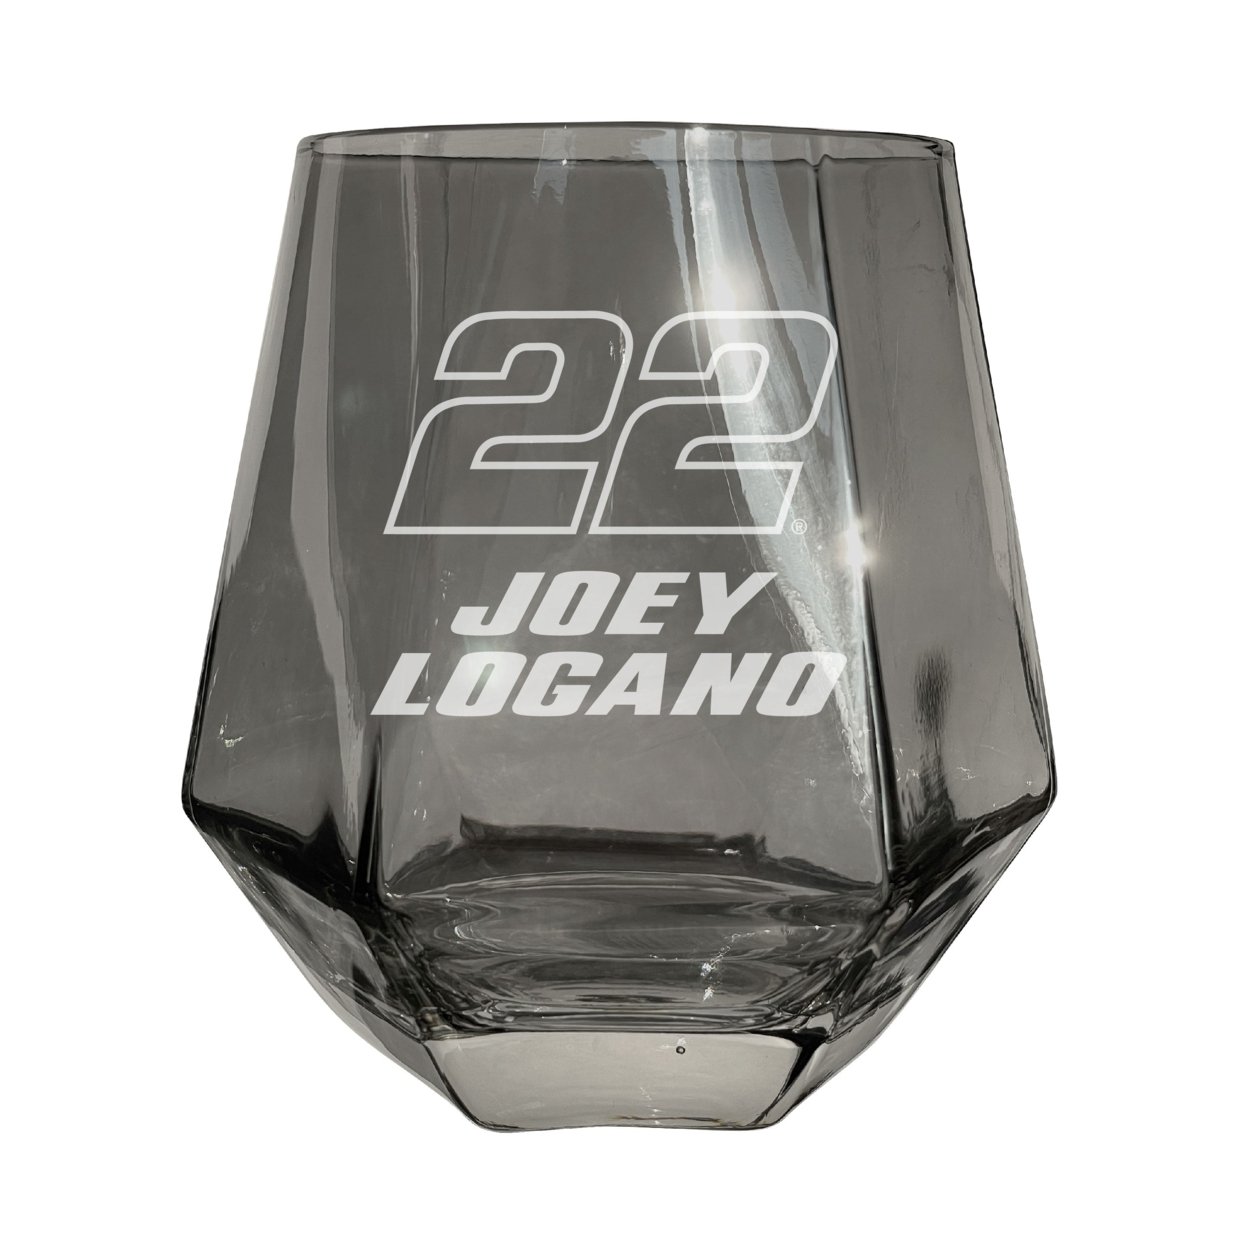 #22 Joey Logano Officially Licensed 10 Oz Engraved Diamond Wine Glass - Iridescent, Single